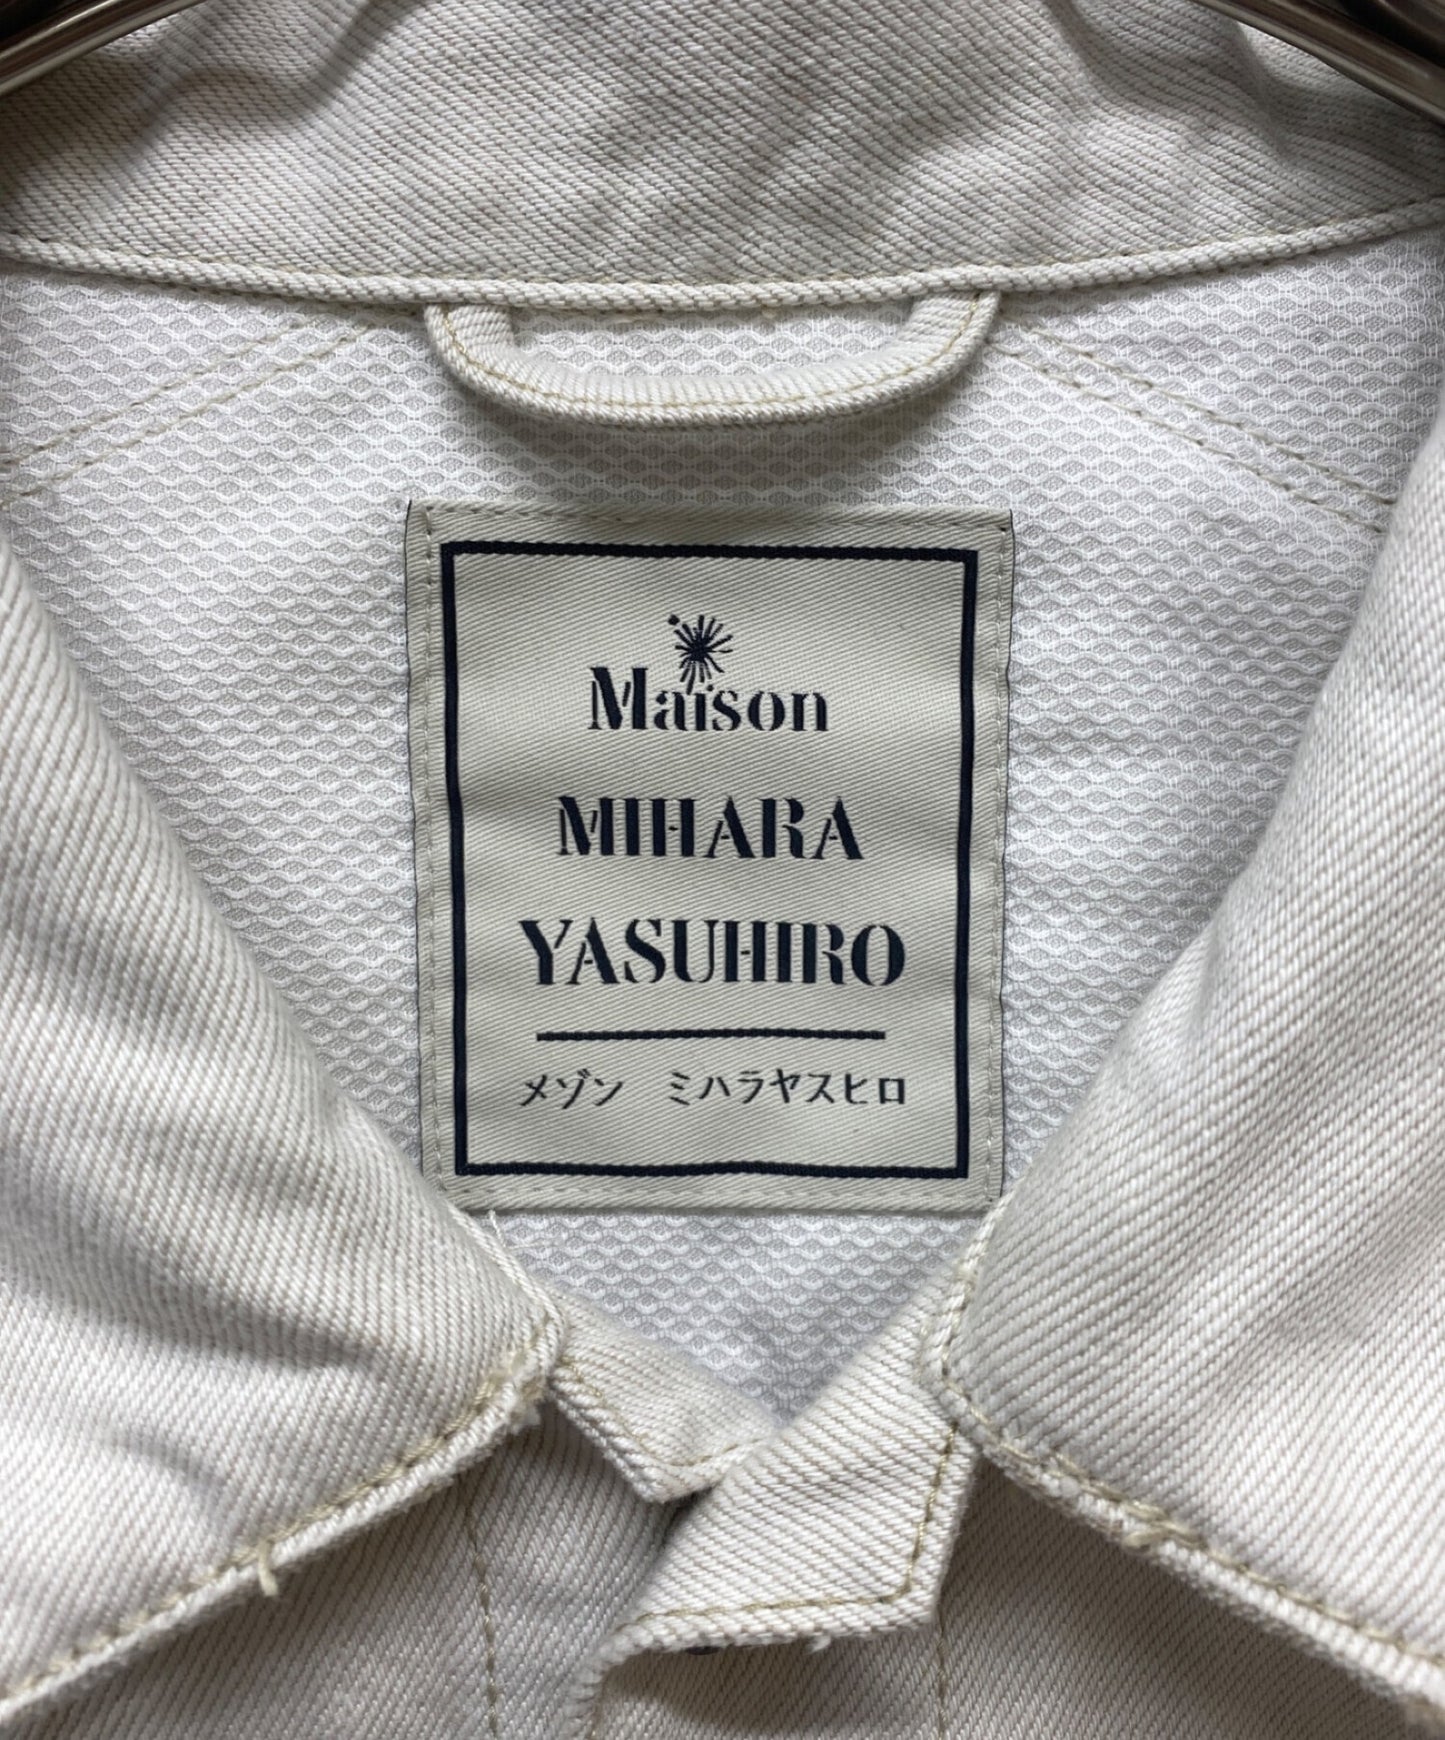 Maison Mihara Yasuhiro 크기즈 셔츠 결합 데님 재킷 B08BL171